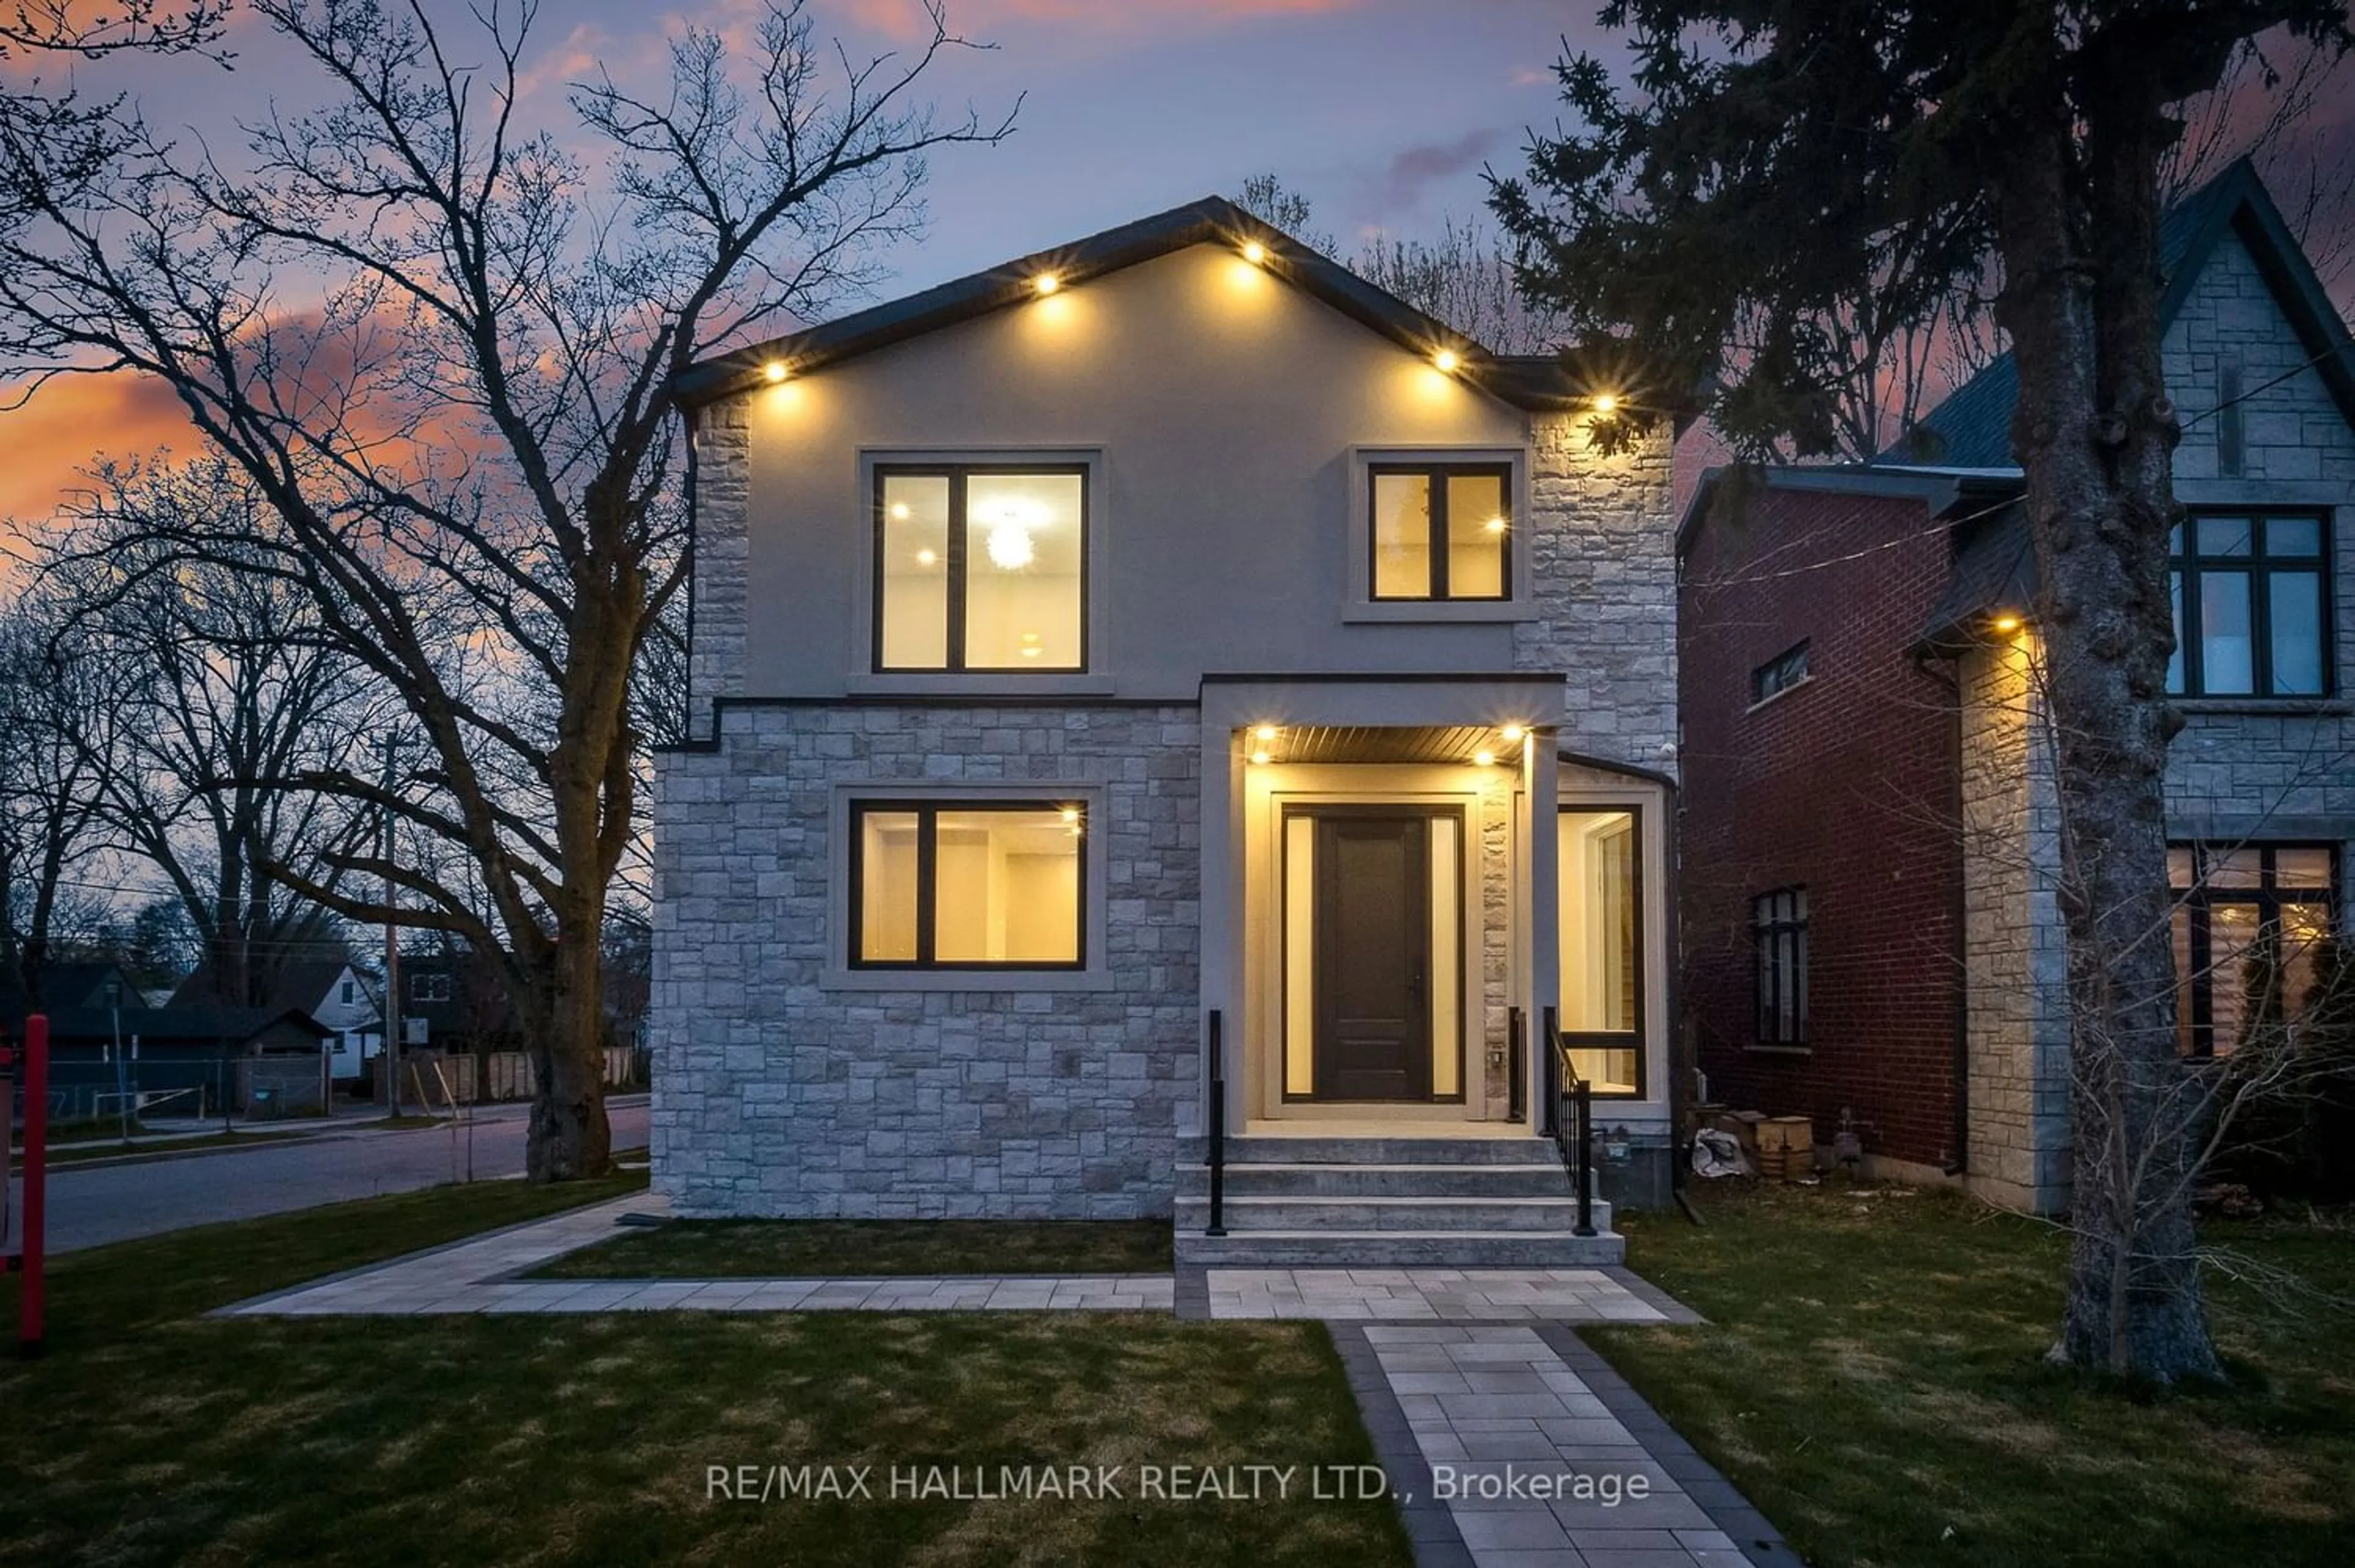 Home with brick exterior material for 50 Dorset Rd, Toronto Ontario M1M 2S7